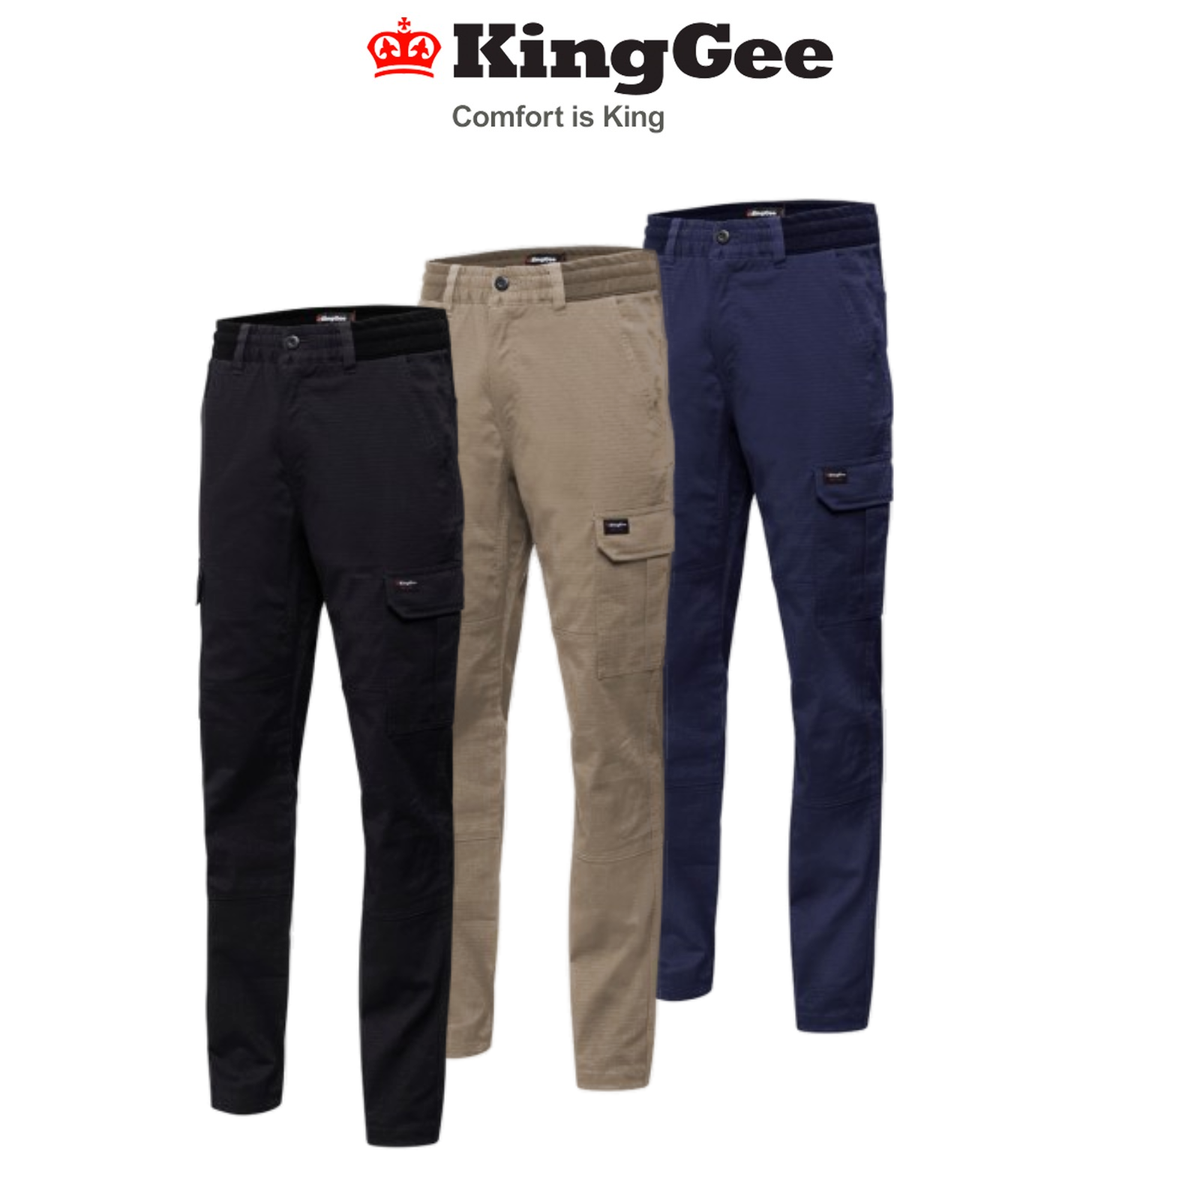 KingGee Mens Rib Comfy Waist Pant Tough Waistband Work Safety Drawstring K13005